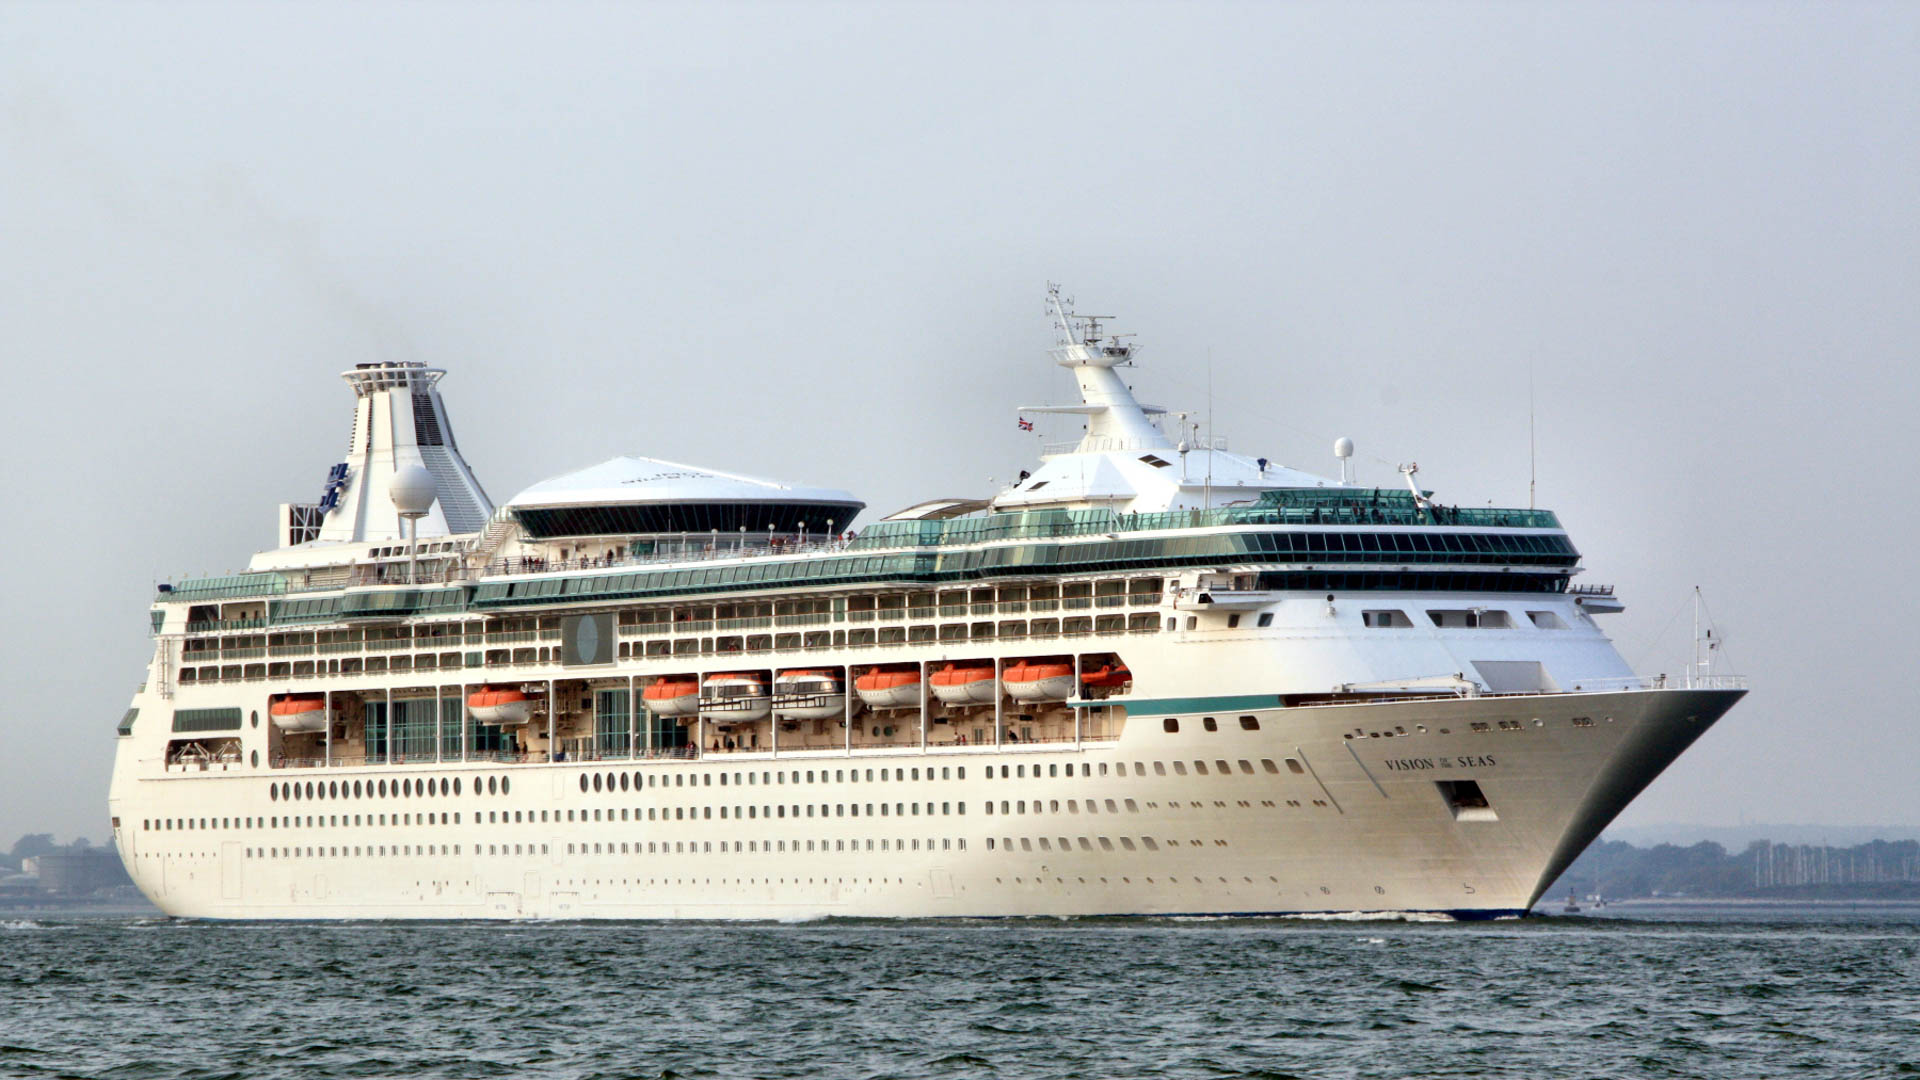 Vision of the Seas - Cruise Passenger